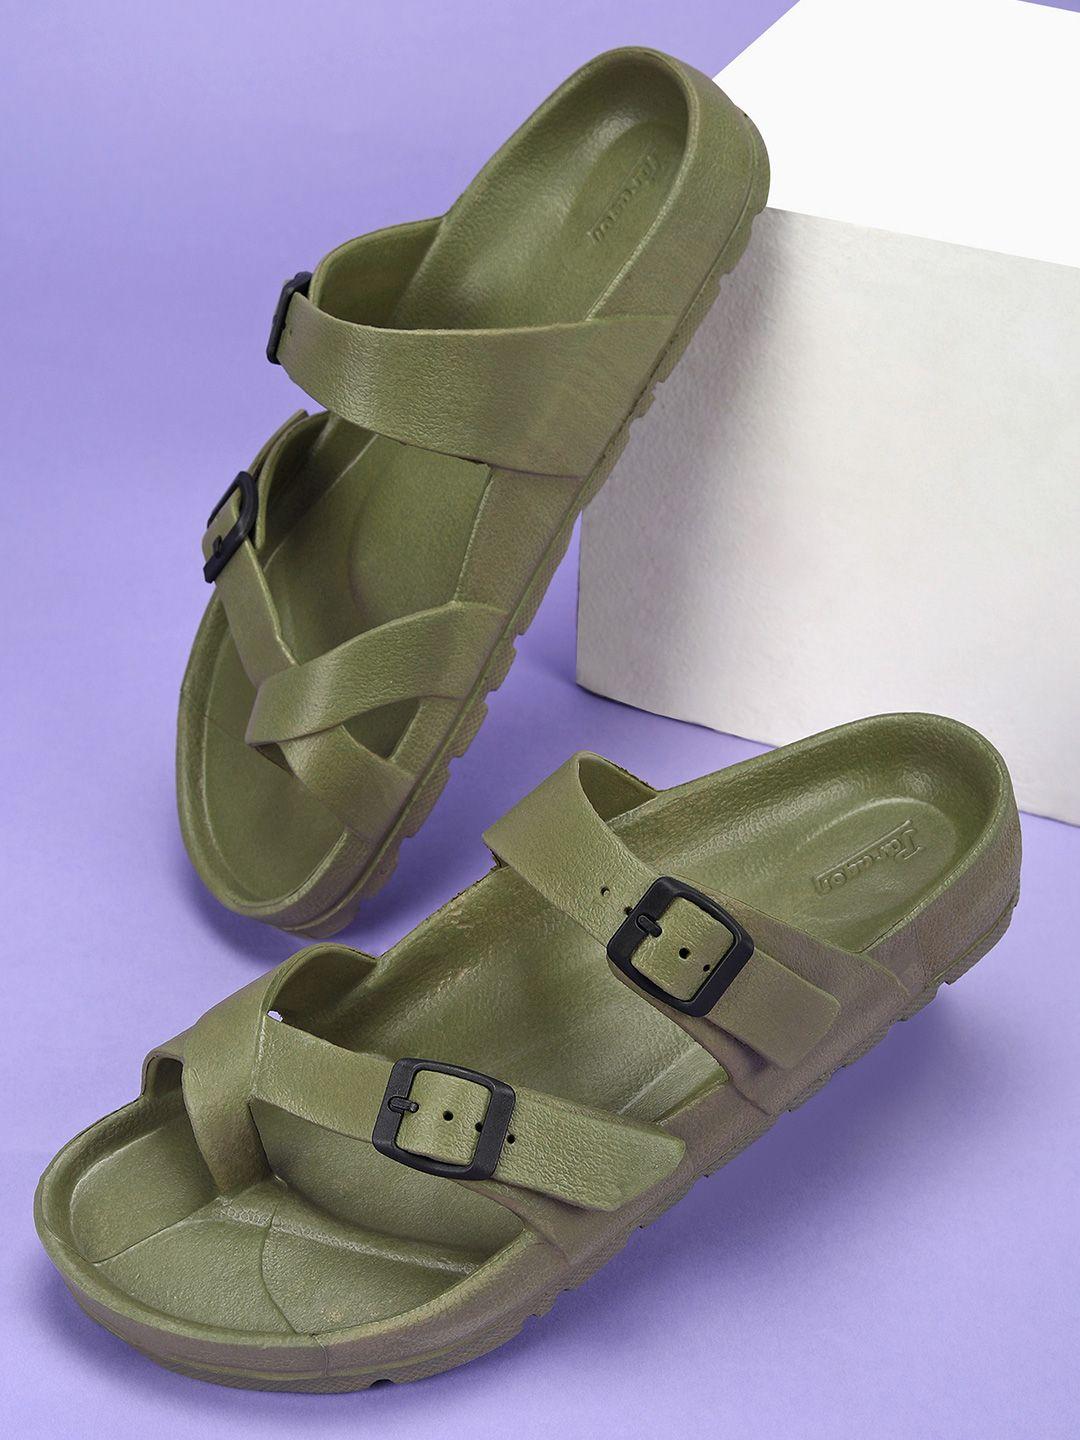 paragon textured lightweight comfort sandals